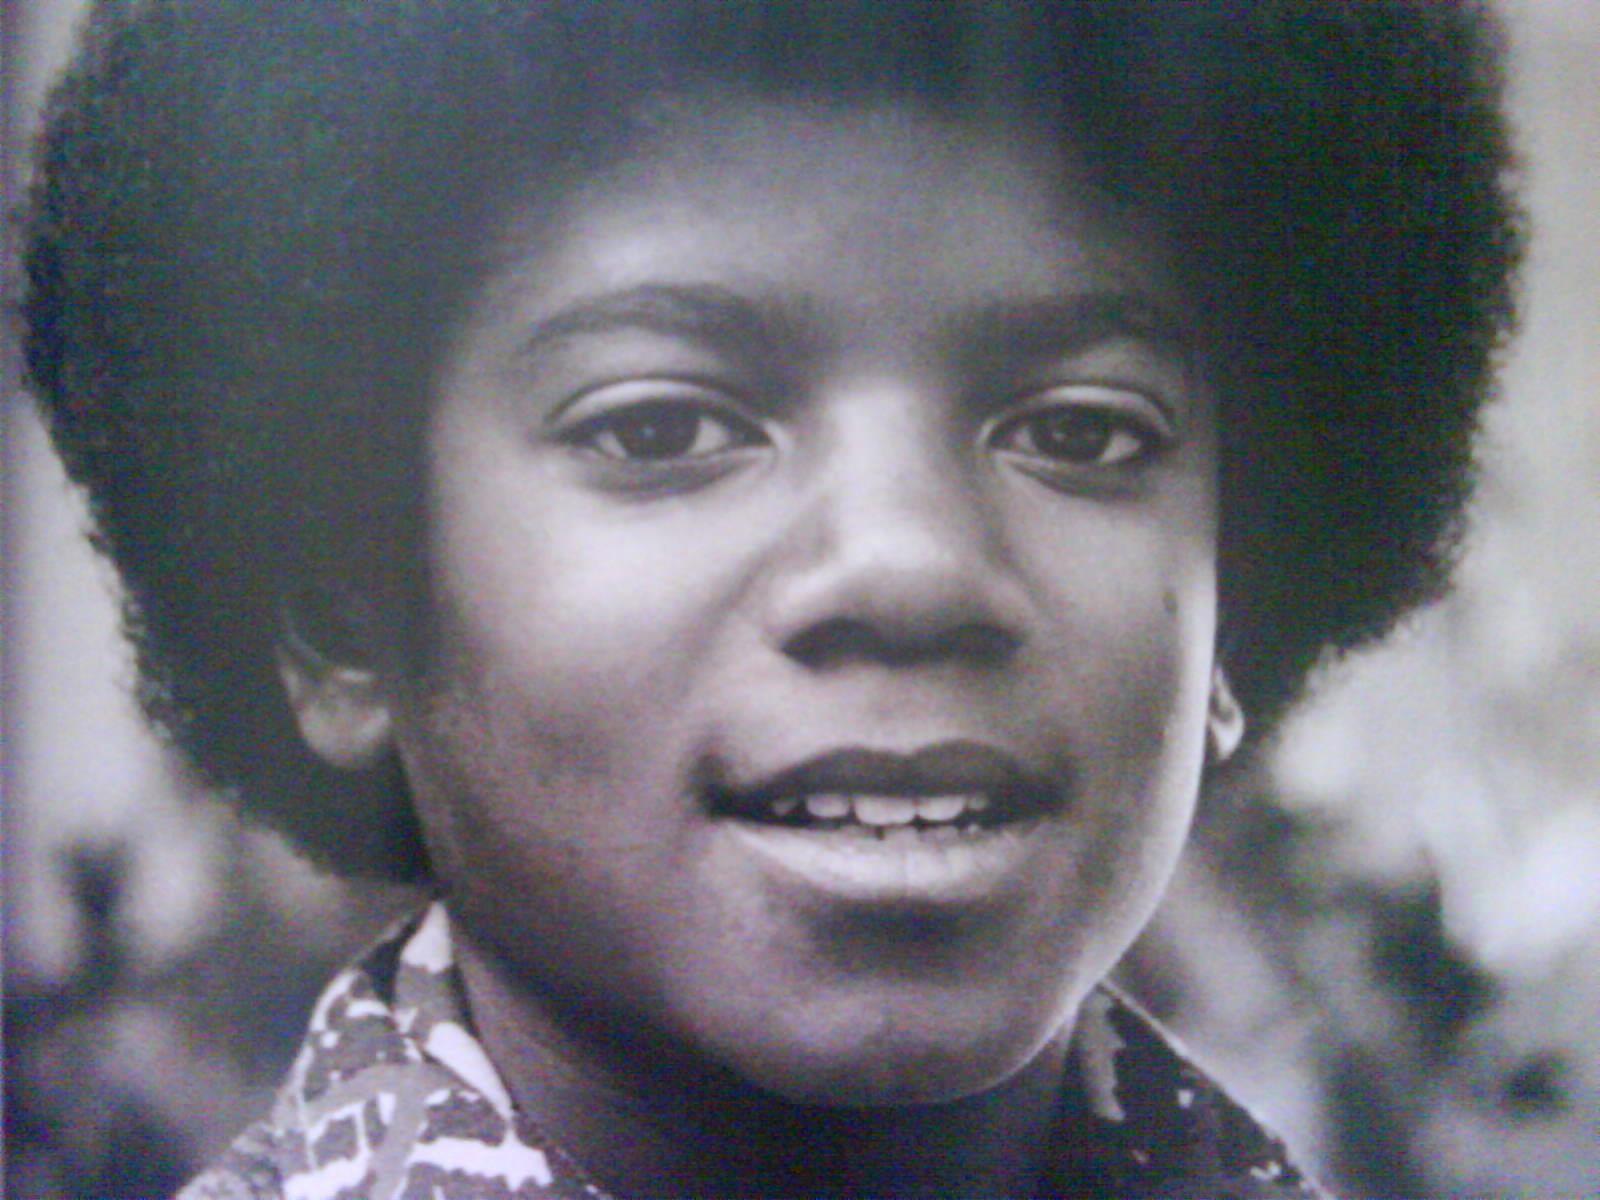 Michael Jackson image jackson 5 era HD wallpaper and background